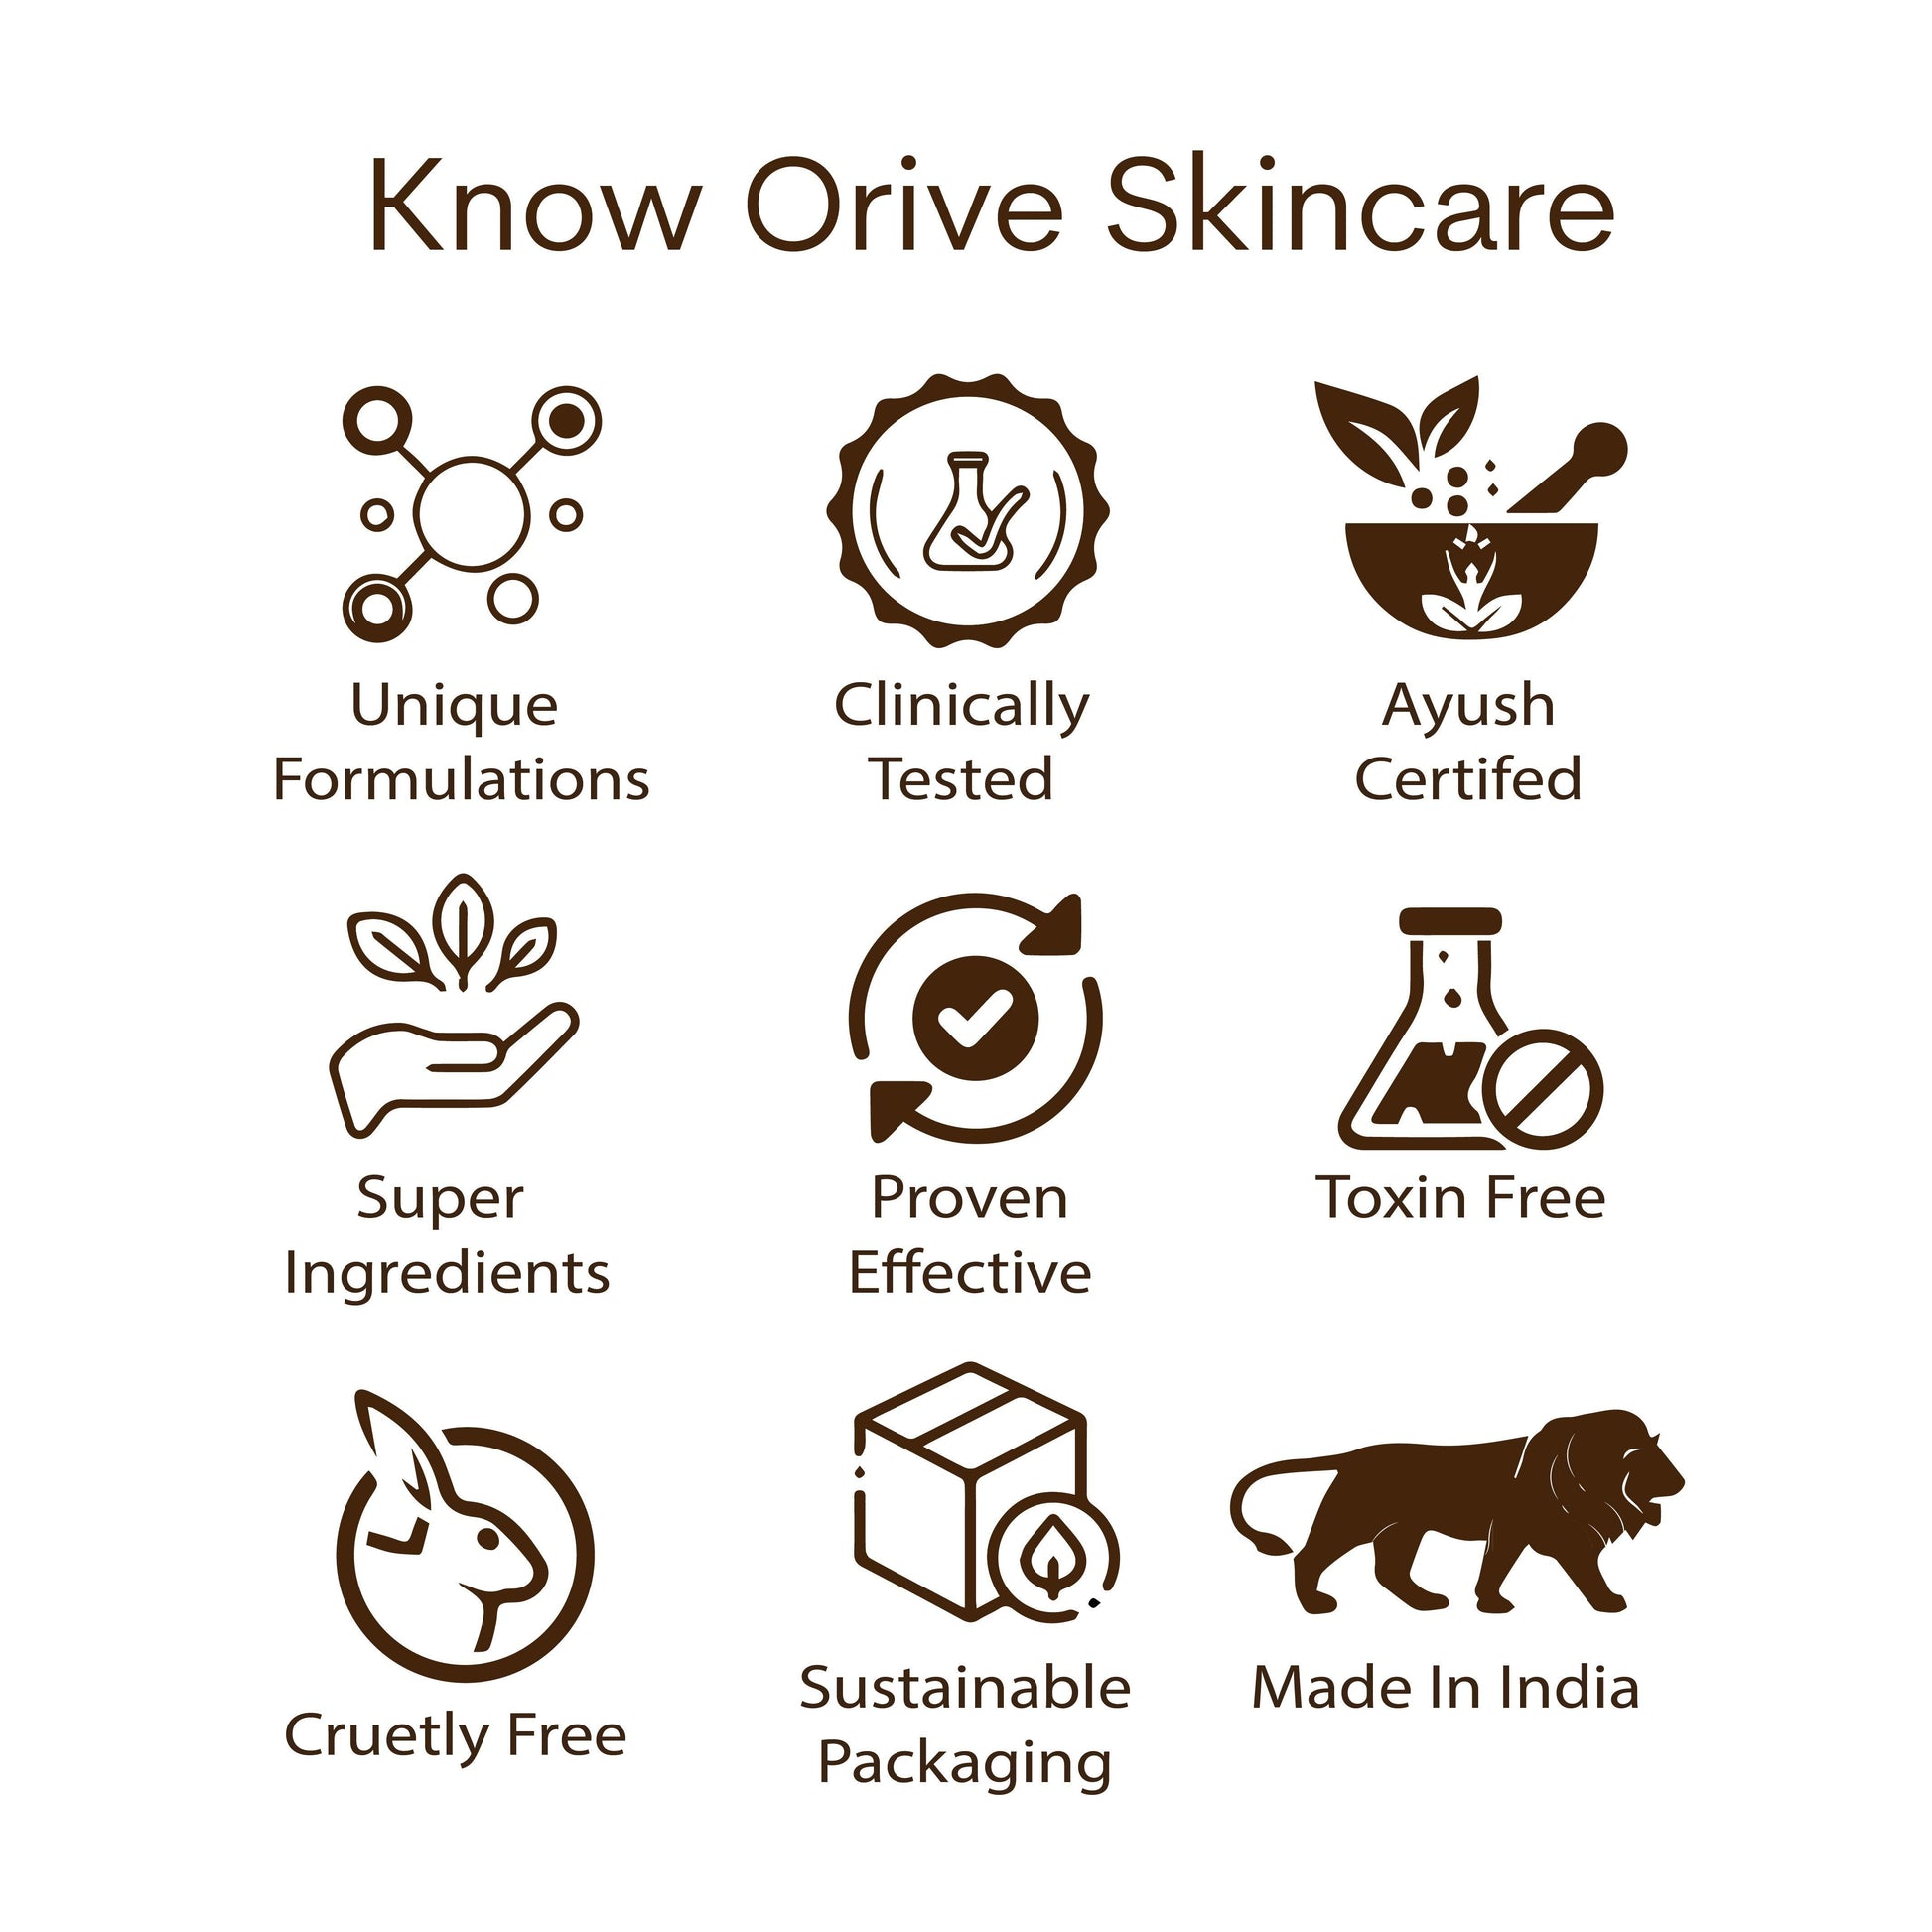 Mini Radiance Ritual (Tea Tree) | Facewash | For Oily Skin - Orive Organics